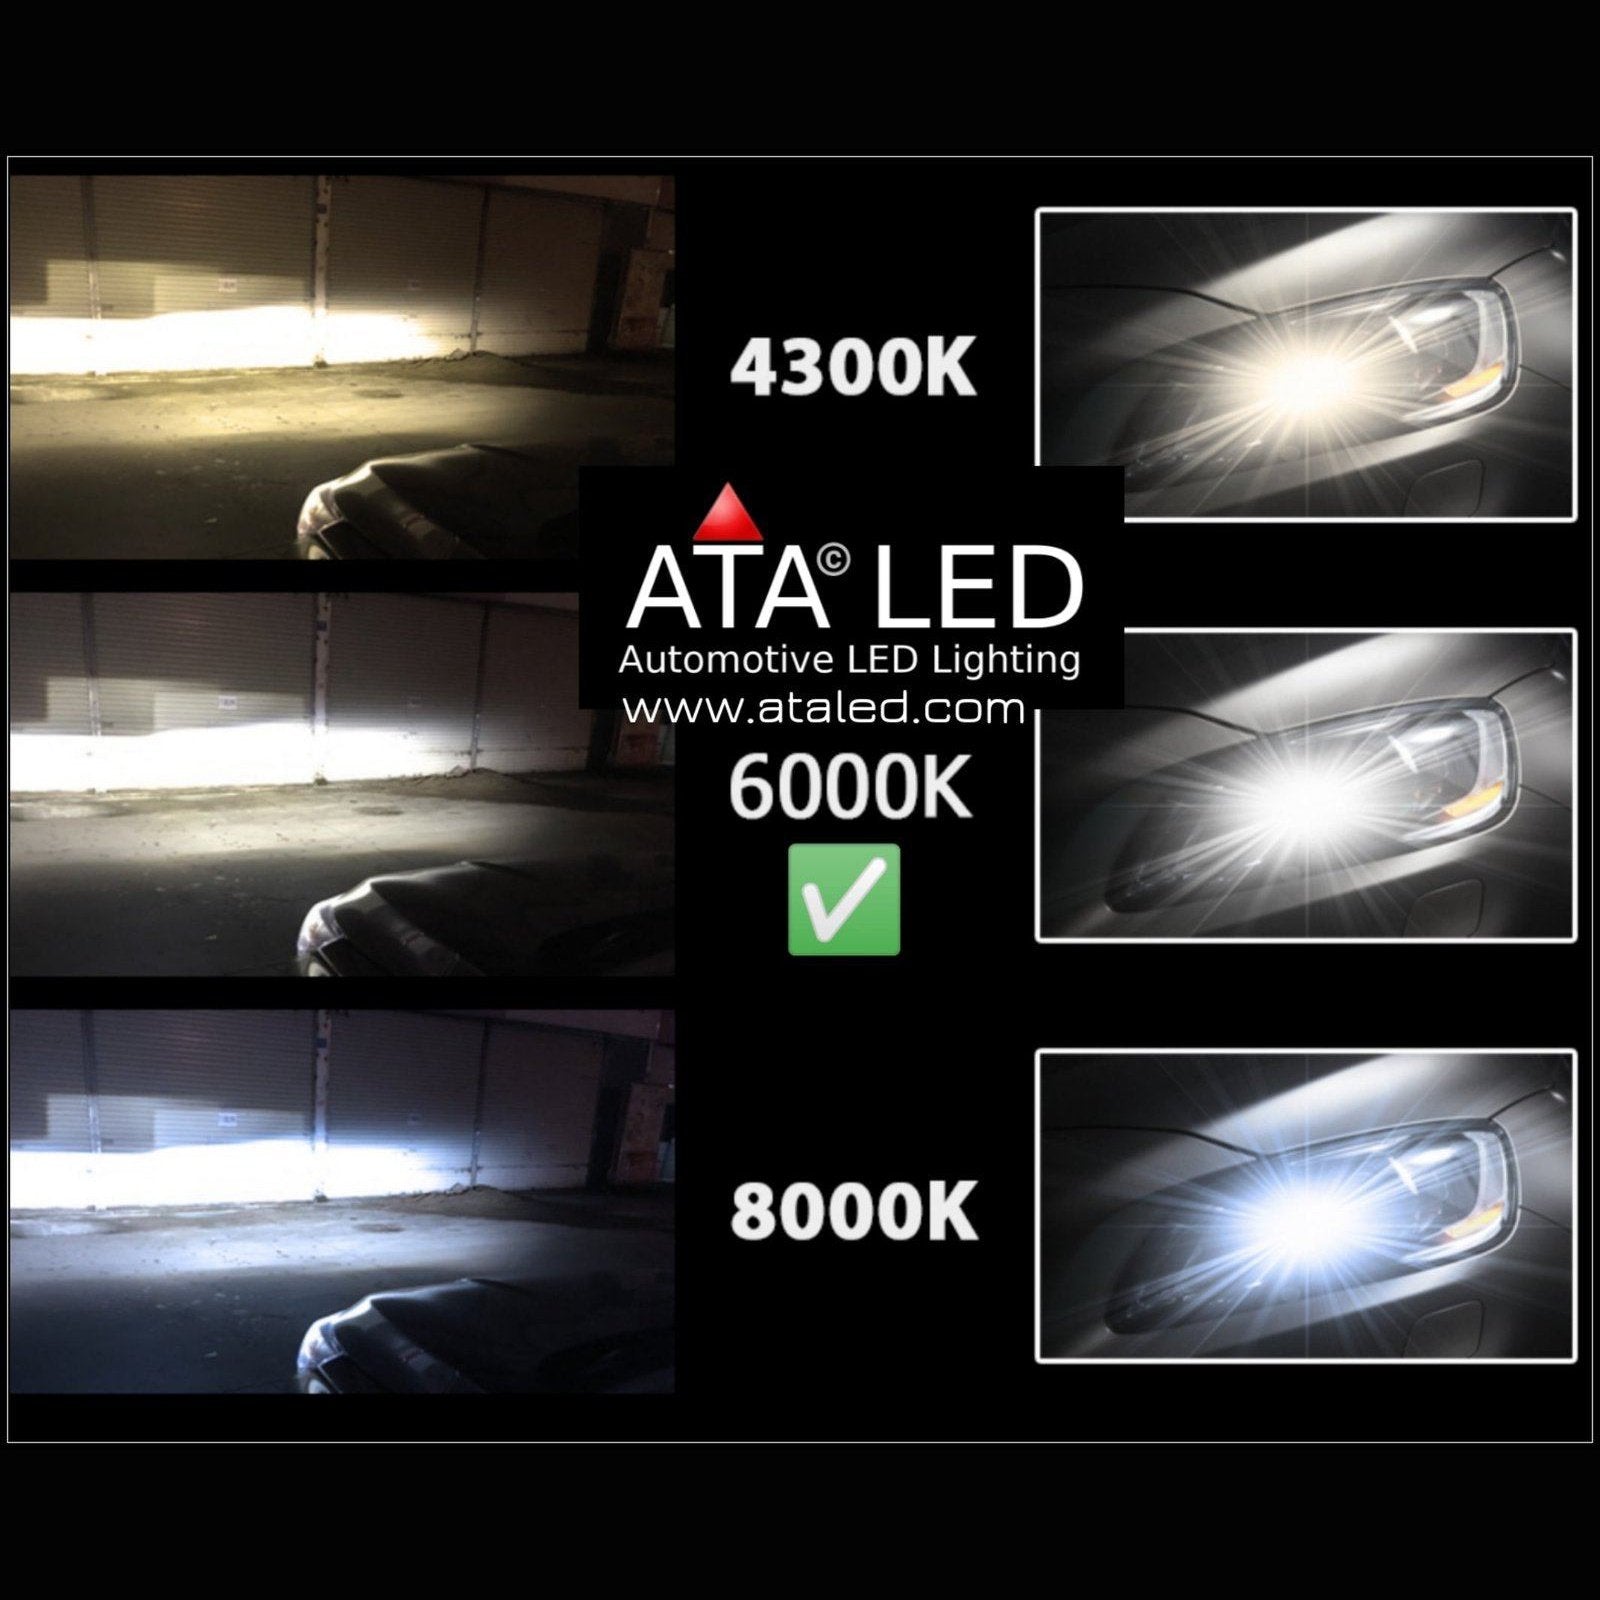 H4/9003 - A5 - 10,000 Lúmens - ATALED 6000k White High Intensity (1 Set) 2 x Headlight bulbs